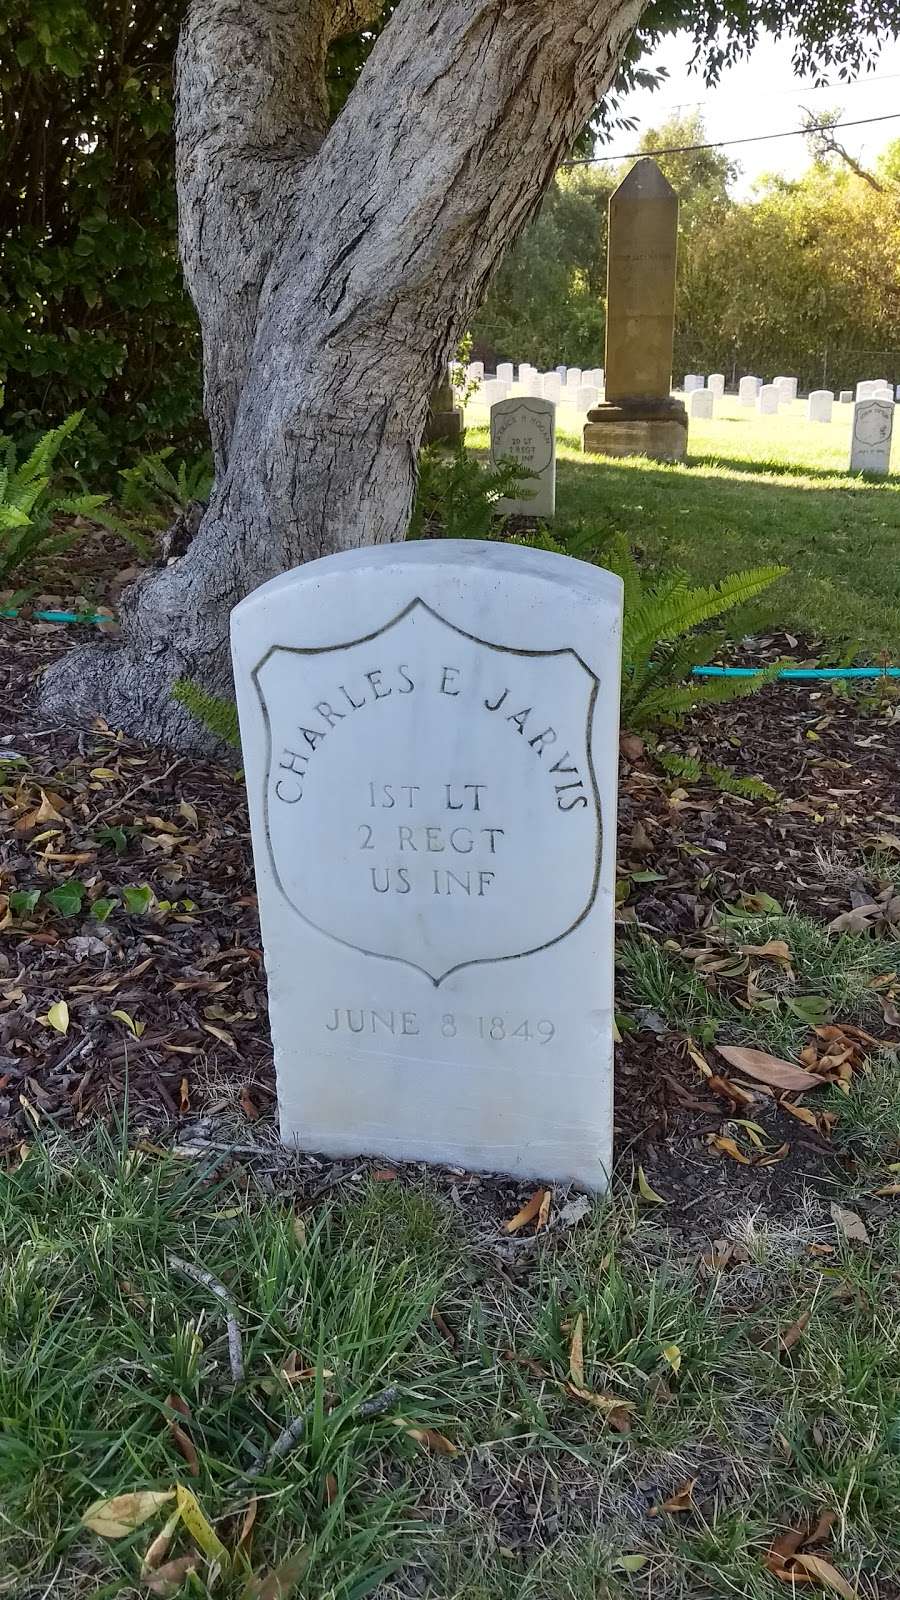 Military Cemetery | Birch Rd, Benicia, CA 94510, USA